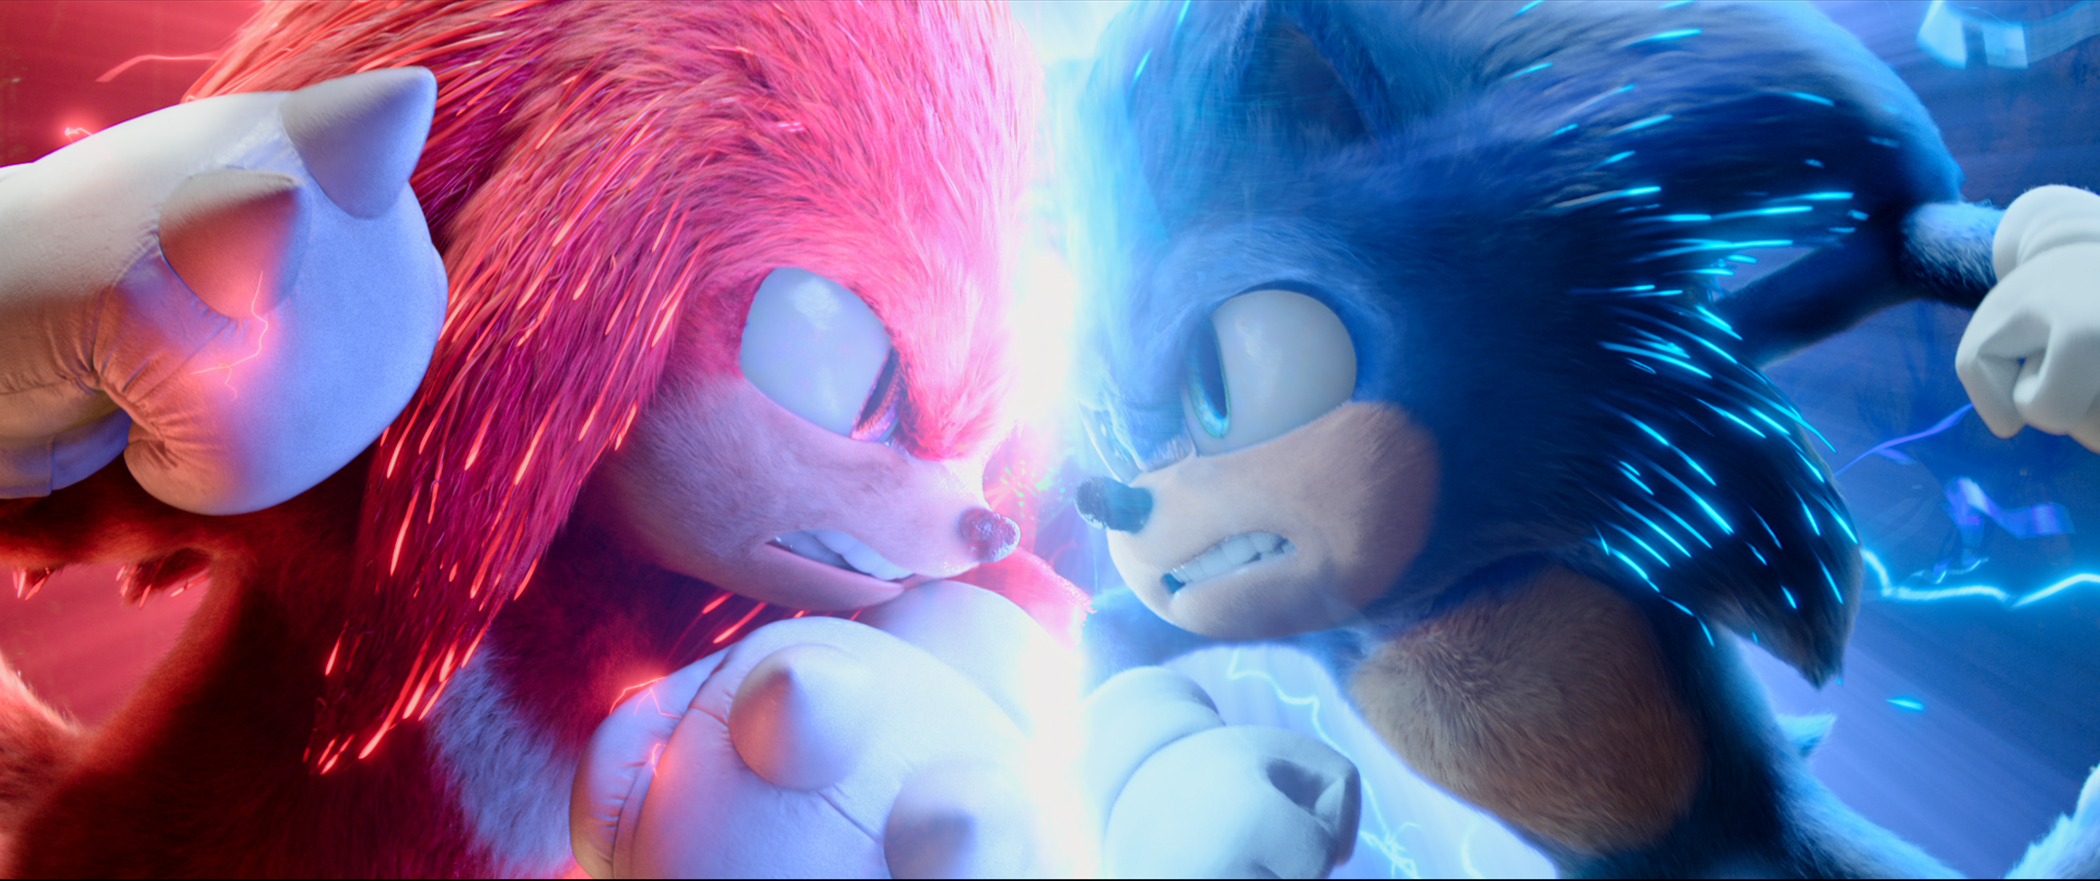 Sonic the Hedgehog 2 HD (Trailer) 